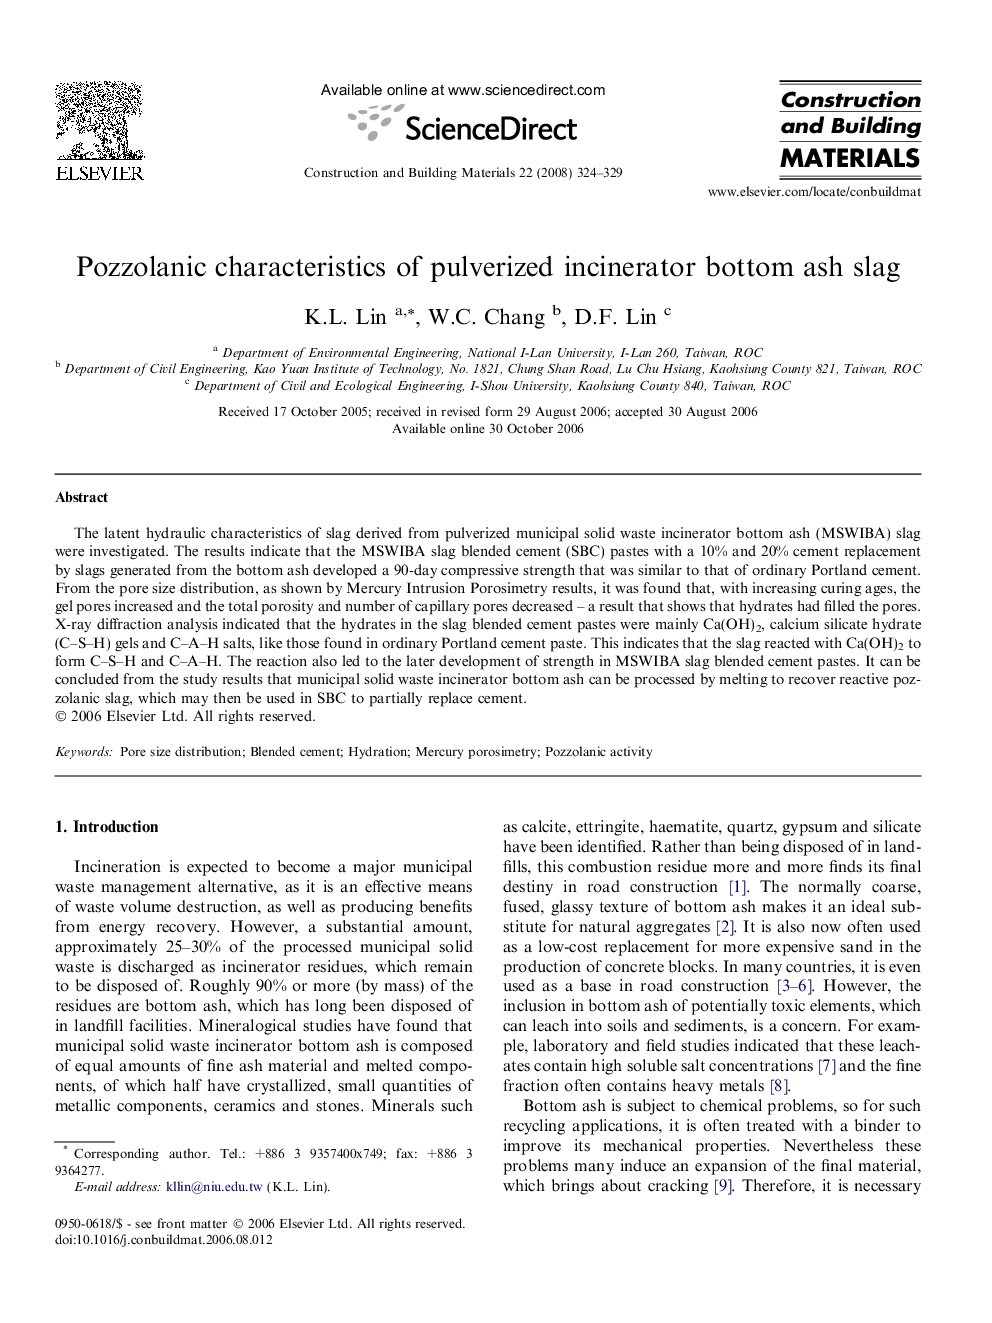 Pozzolanic characteristics of pulverized incinerator bottom ash slag